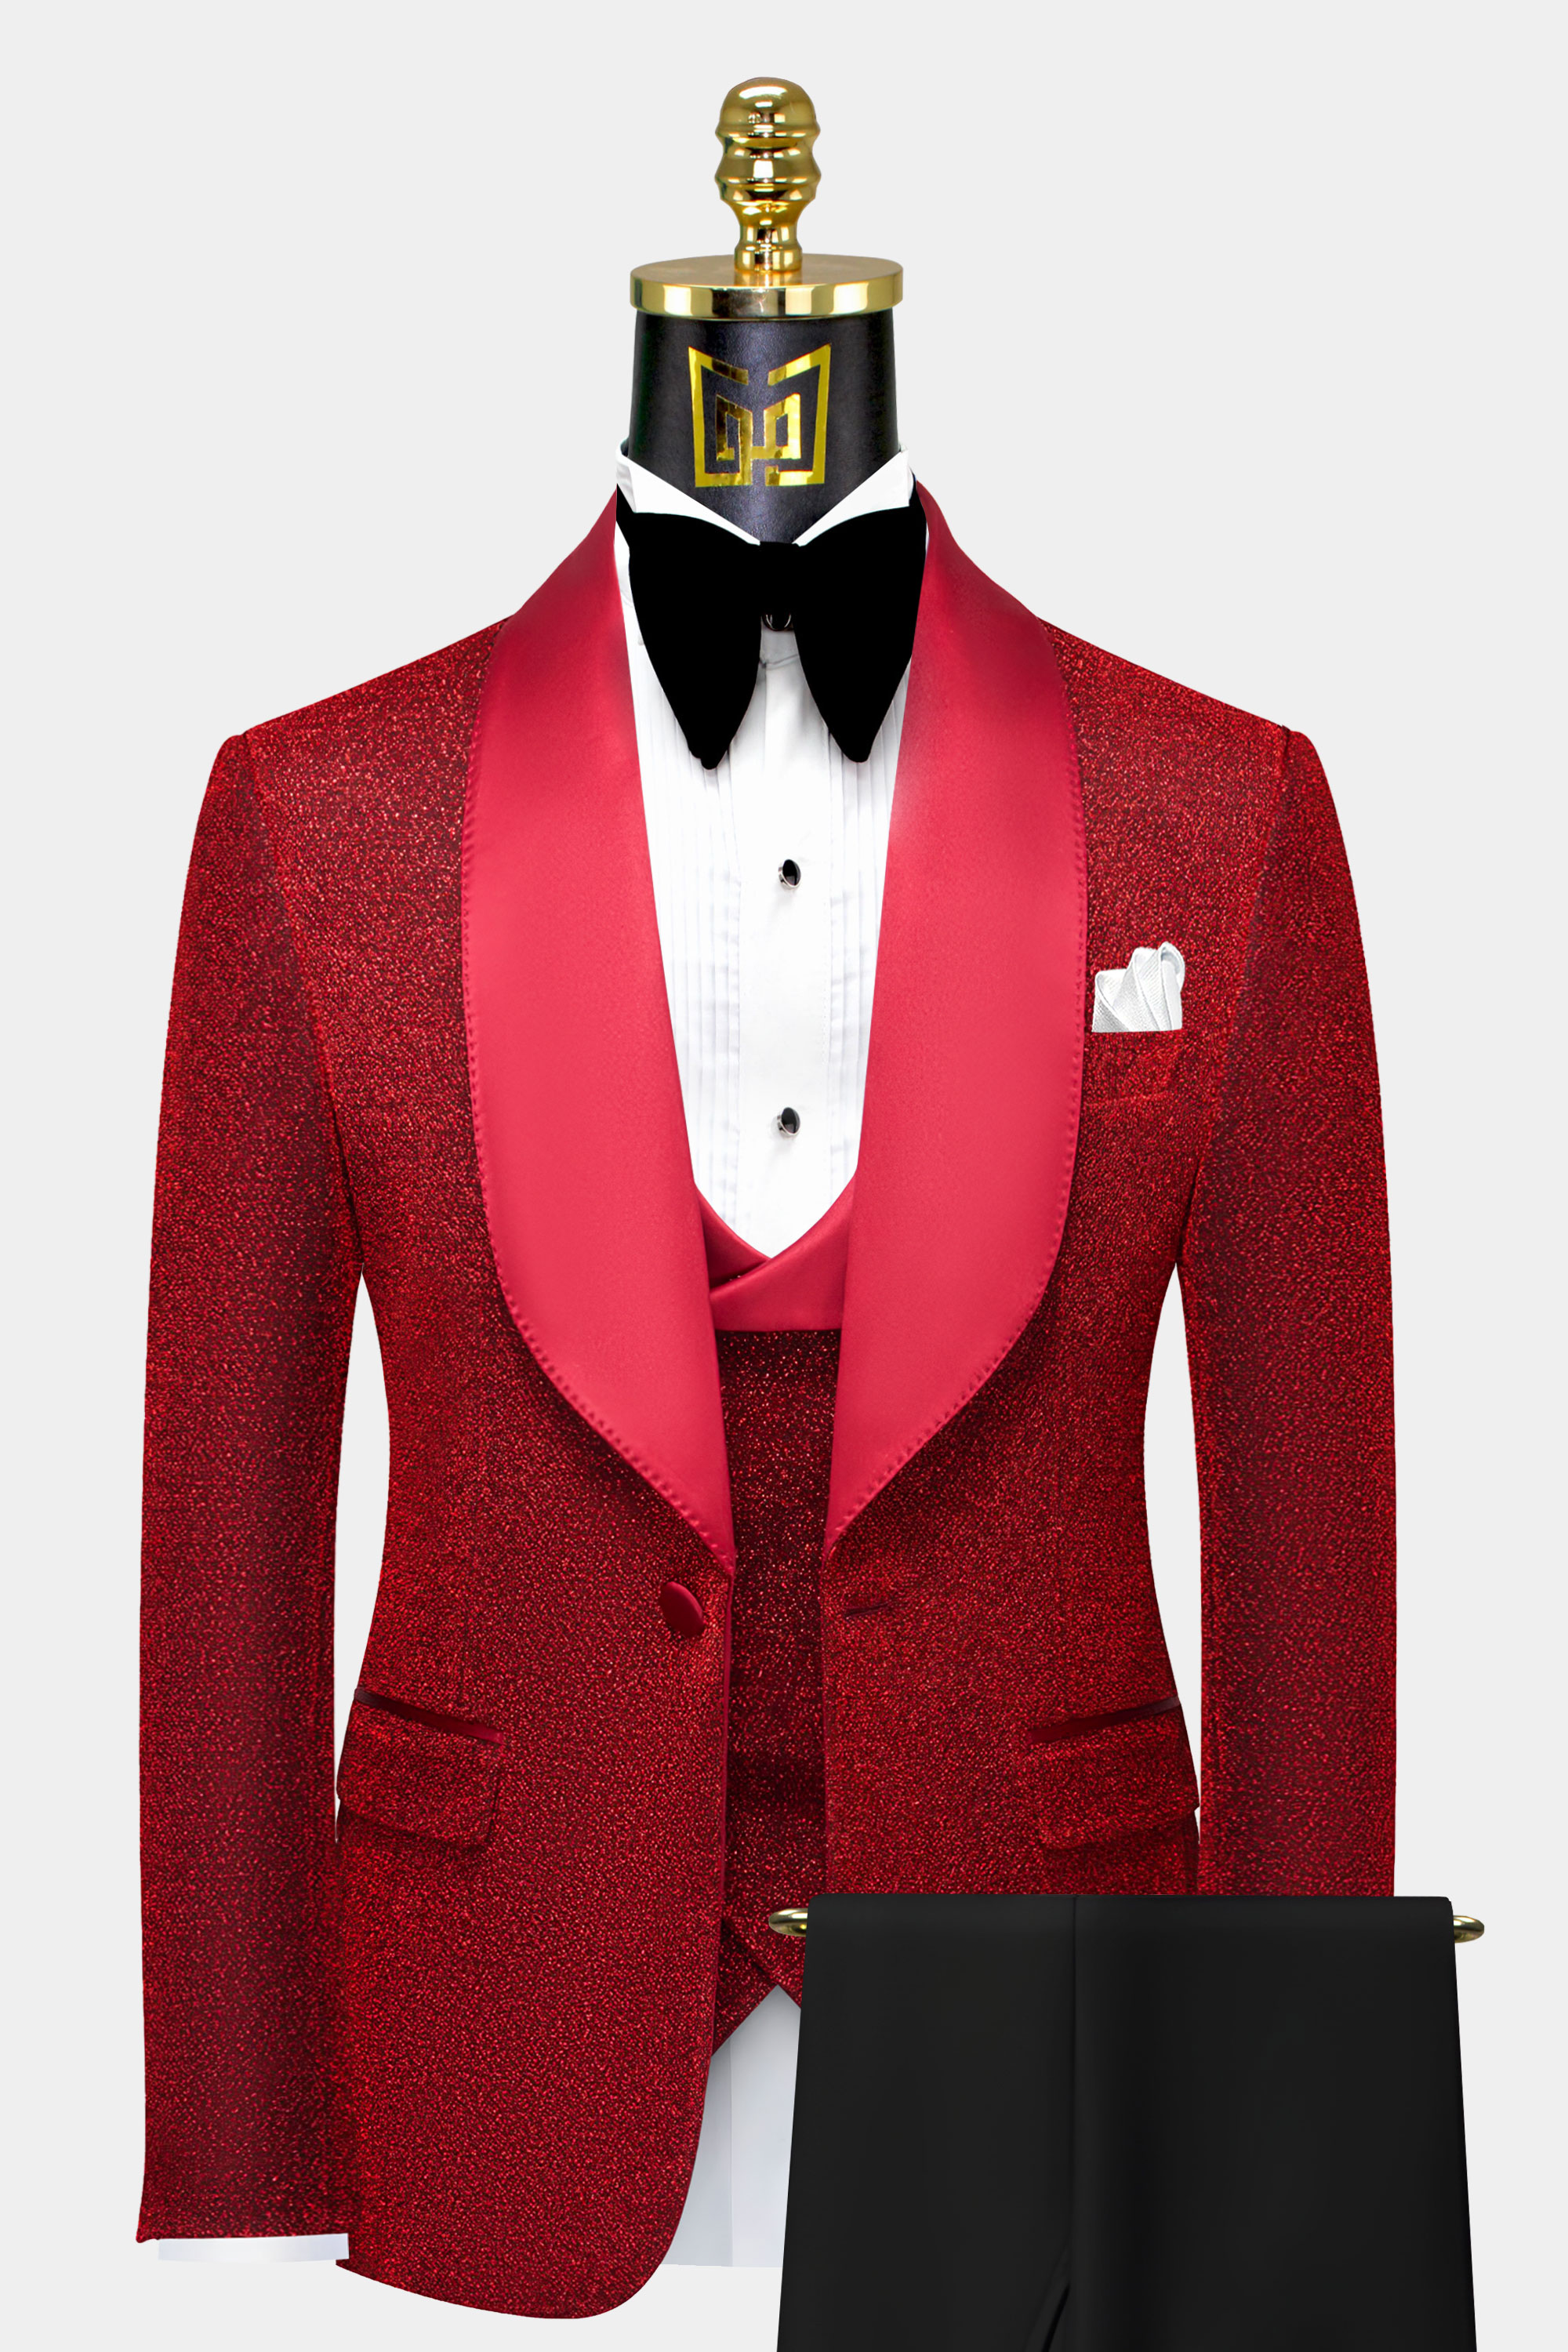 Black-and-Red-Glitter-Tuxedo-Suit-Groom-Wedding-Prom-Suit-For-Guys-from-Gentlemansguru.com